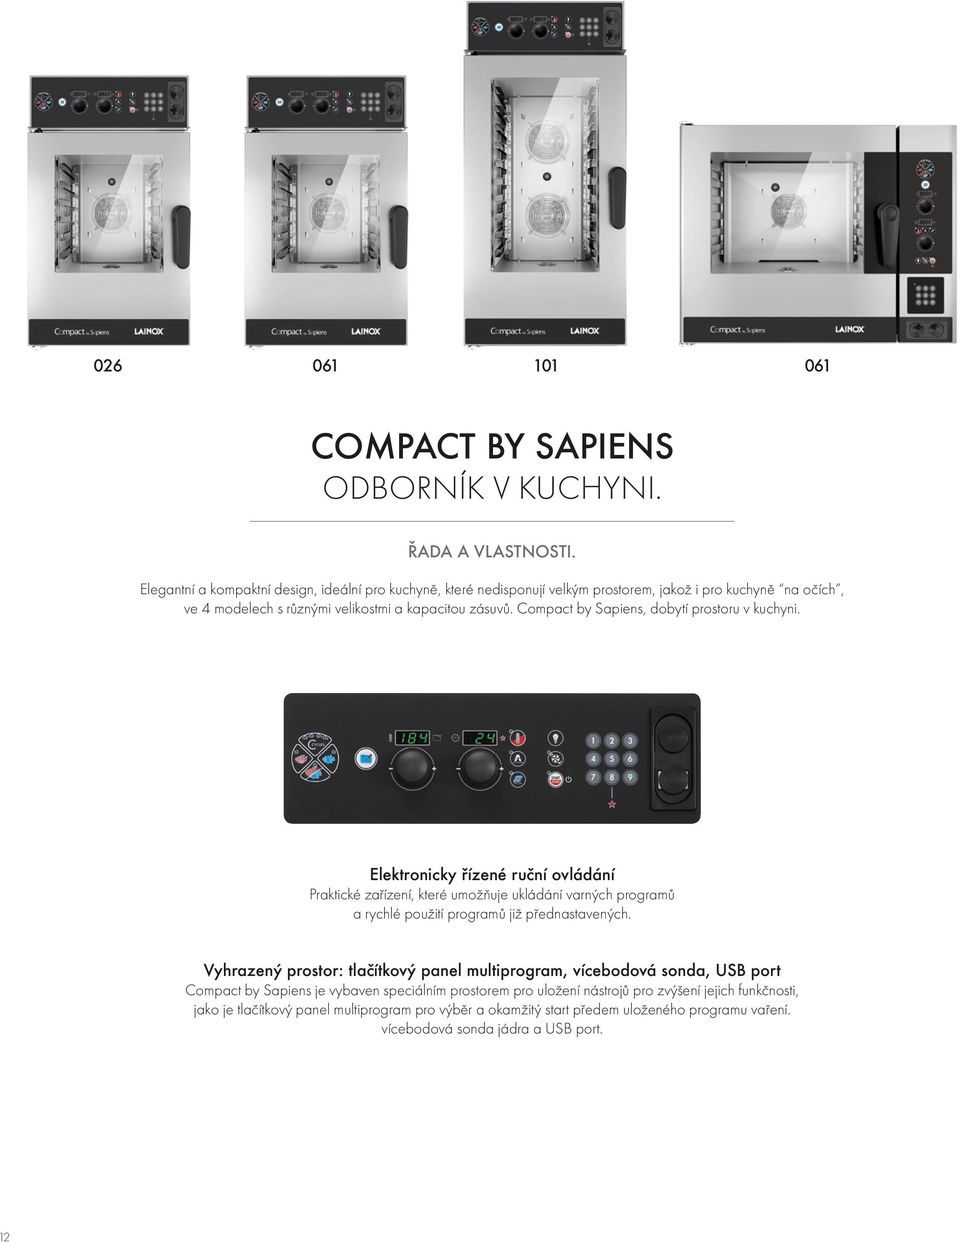 Compact by Sapiens, dobytí prostoru v kuchyni.